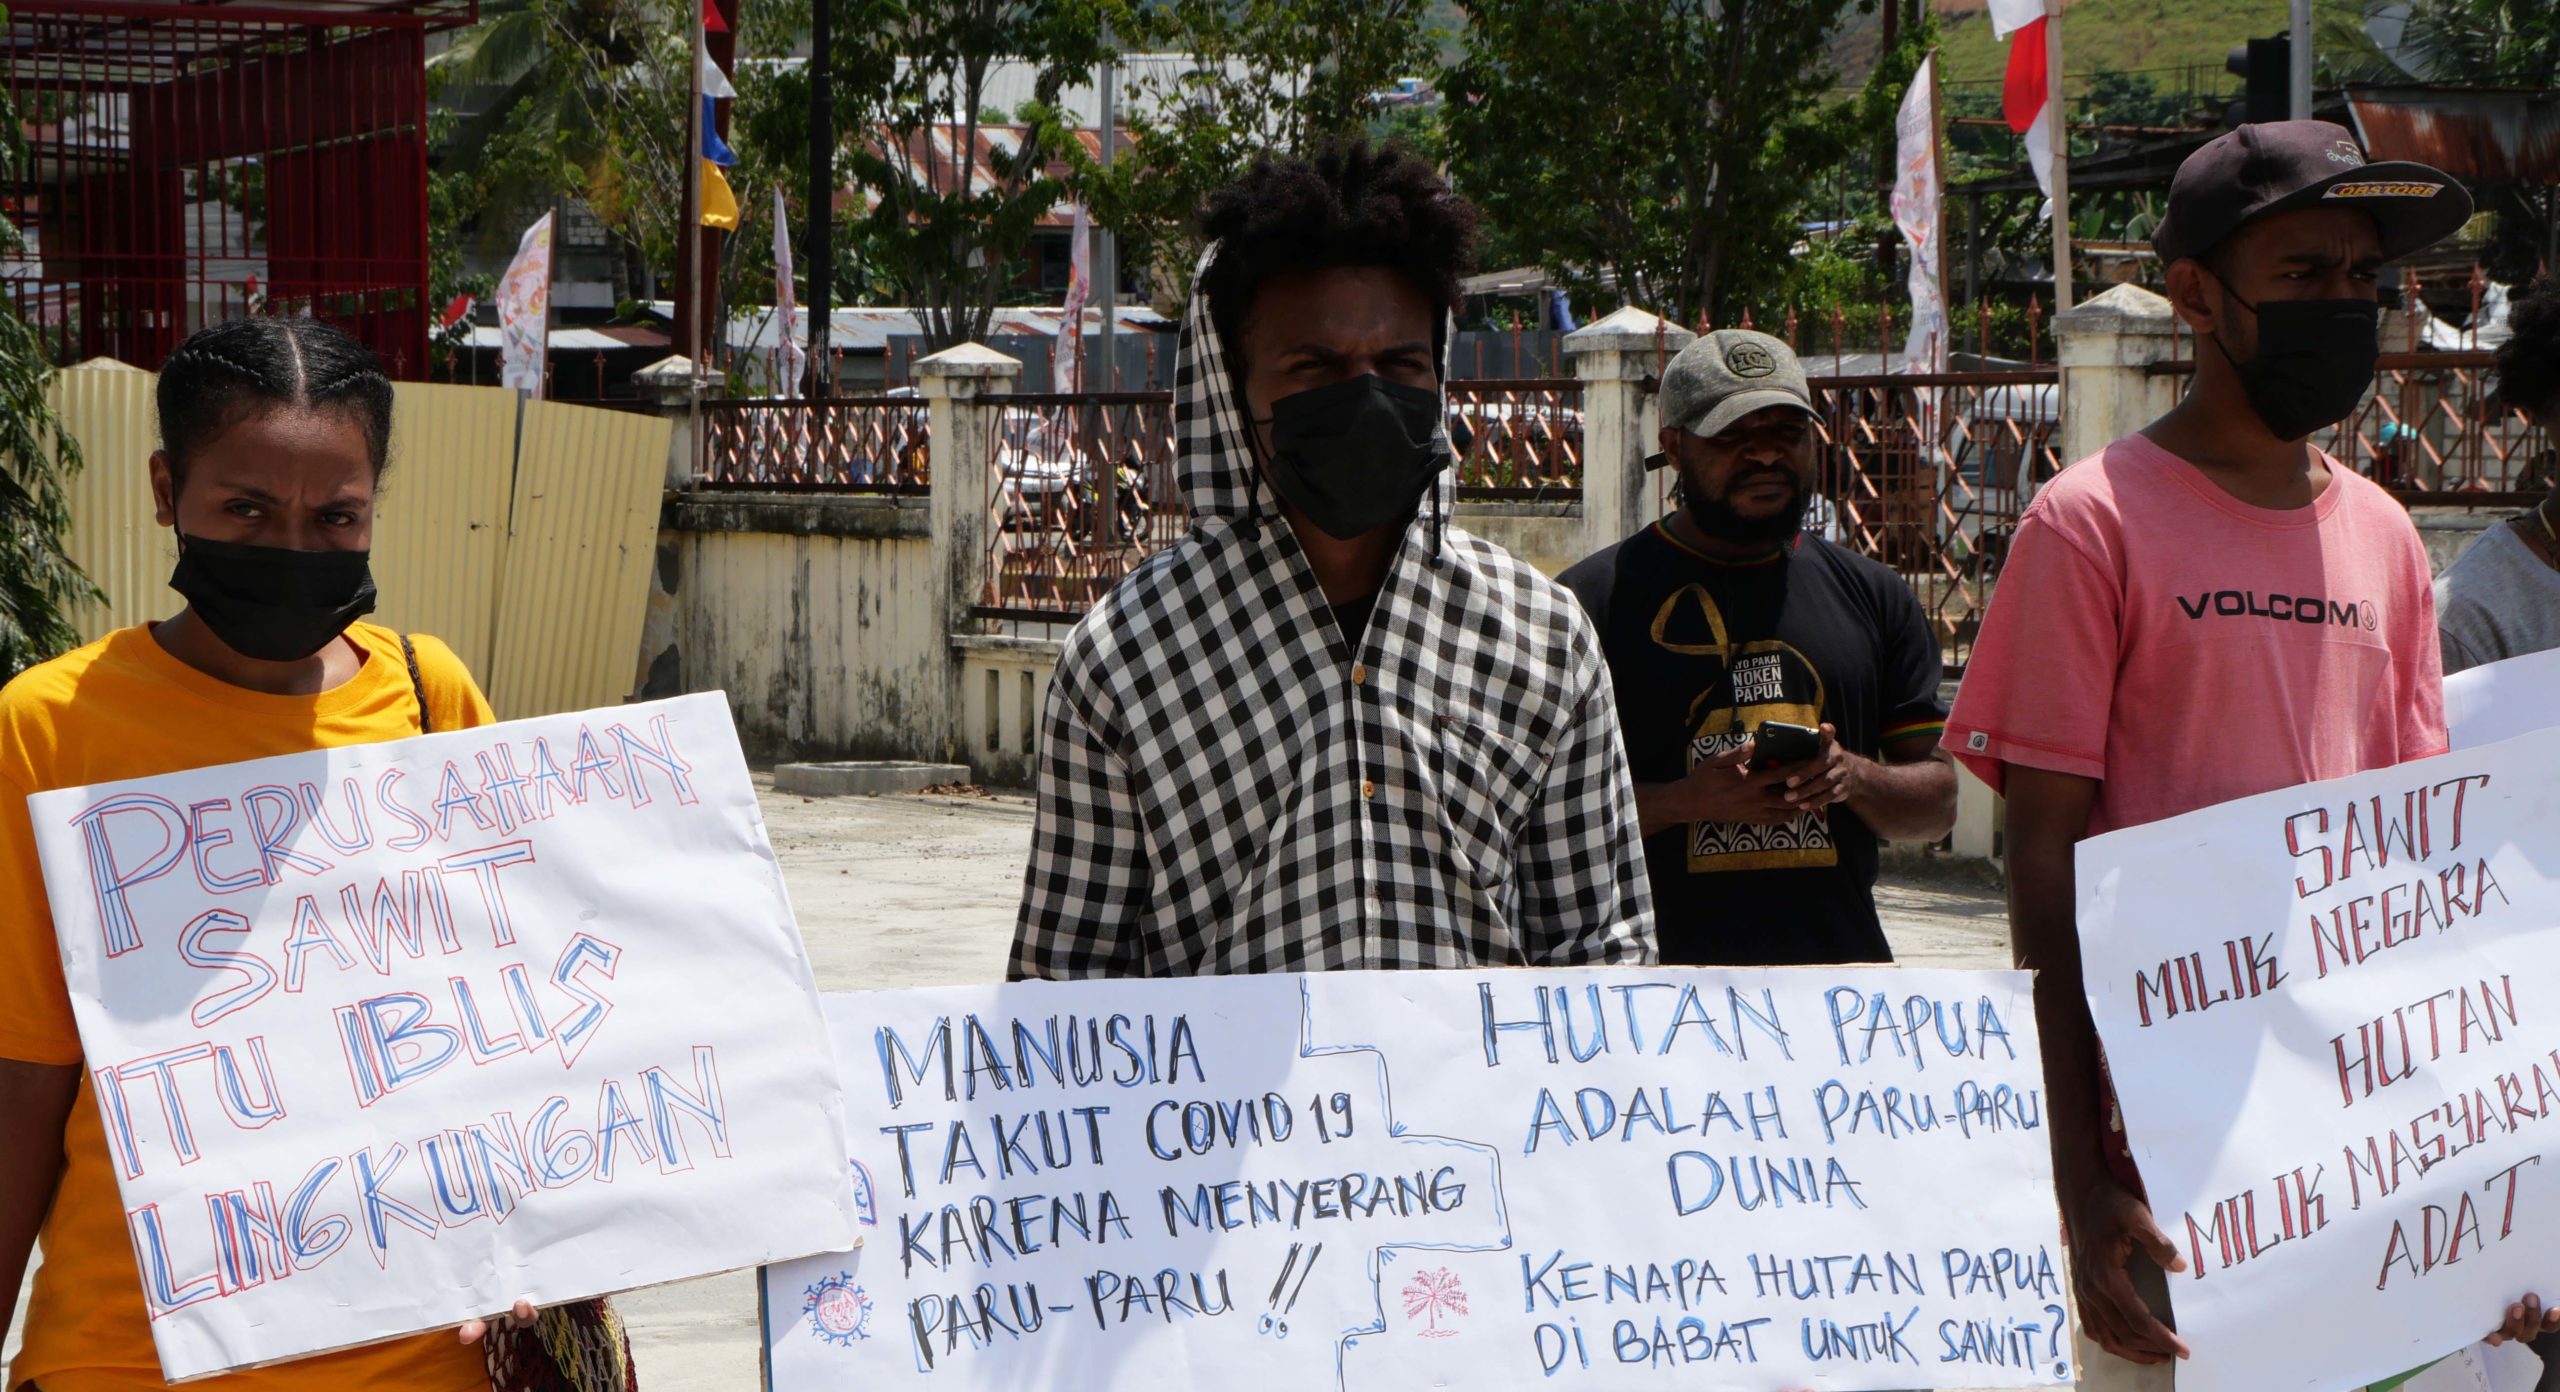 Aksi massa mendukung Bupati Sorong mencabut izin kebun sawit di lahan masyarakat adat. Foto: Asrida Elisabeth/ Mongabay Indonesia